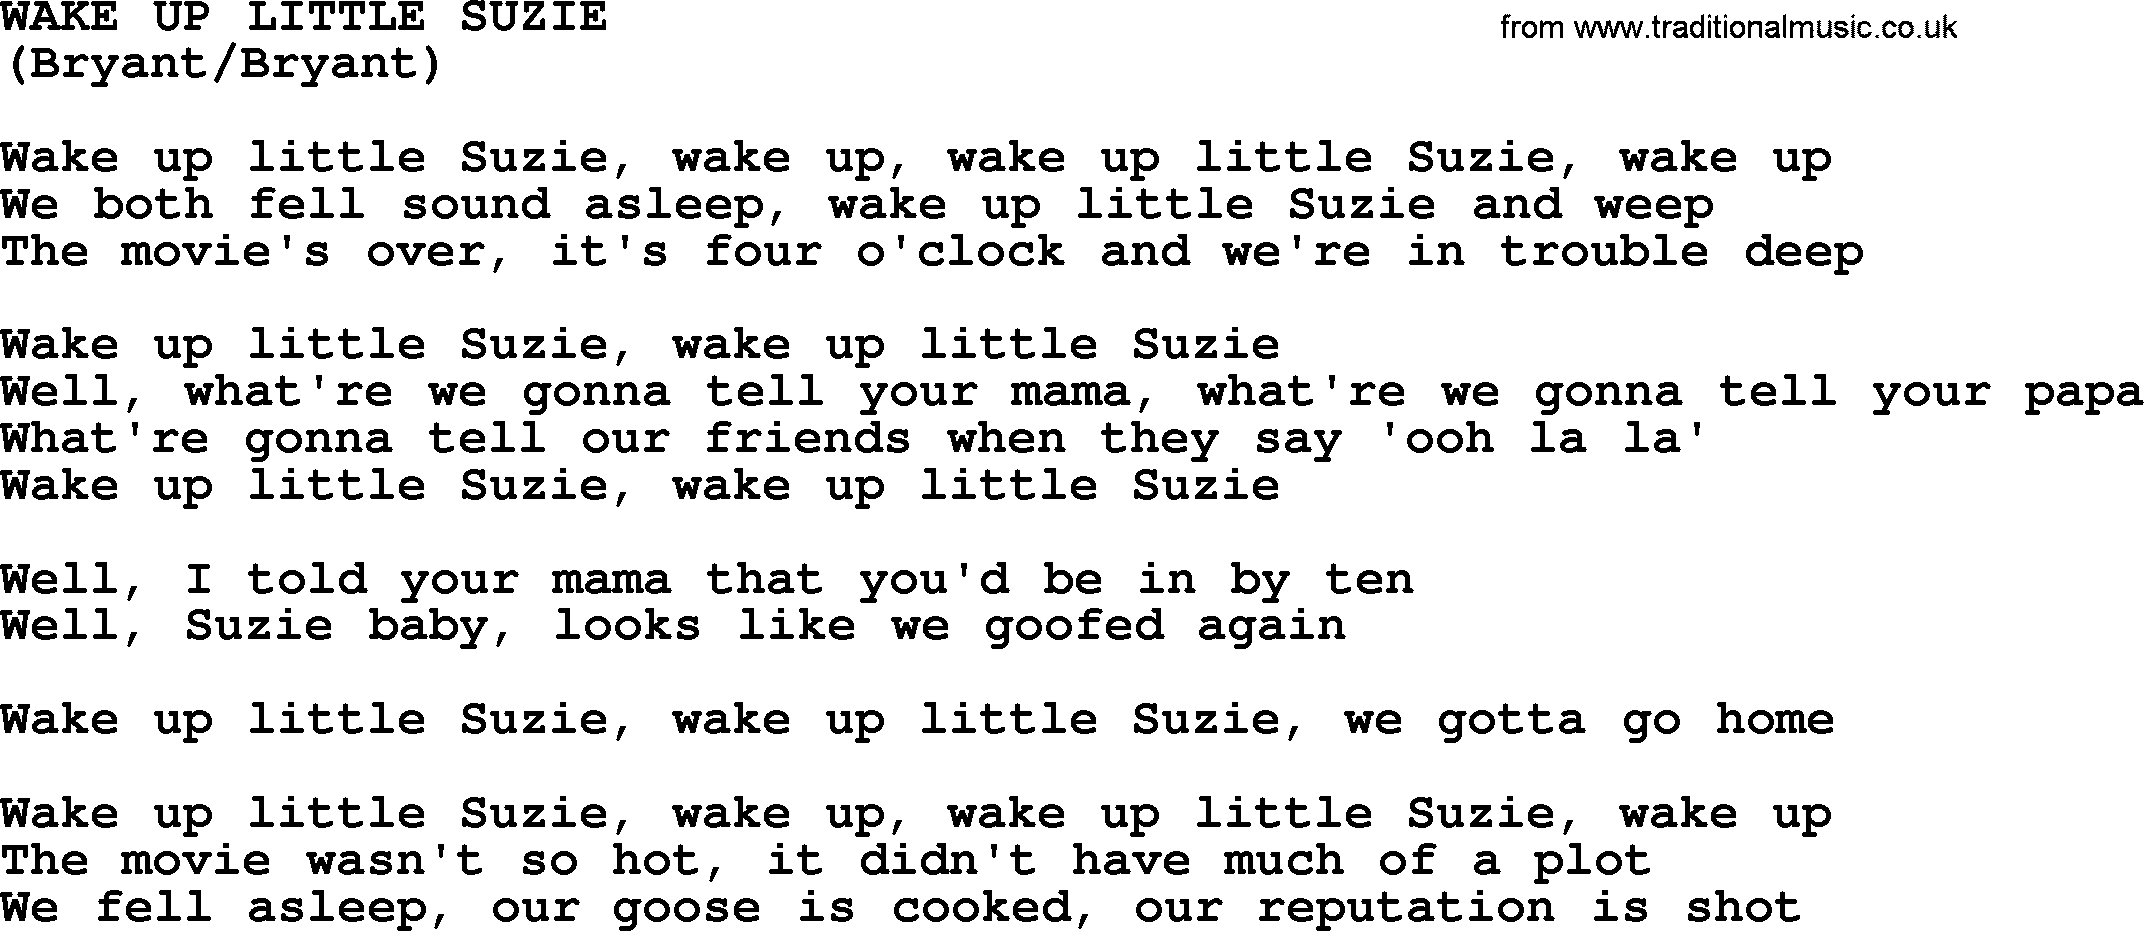 The Byrds song Wake Up Little Suzie, lyrics